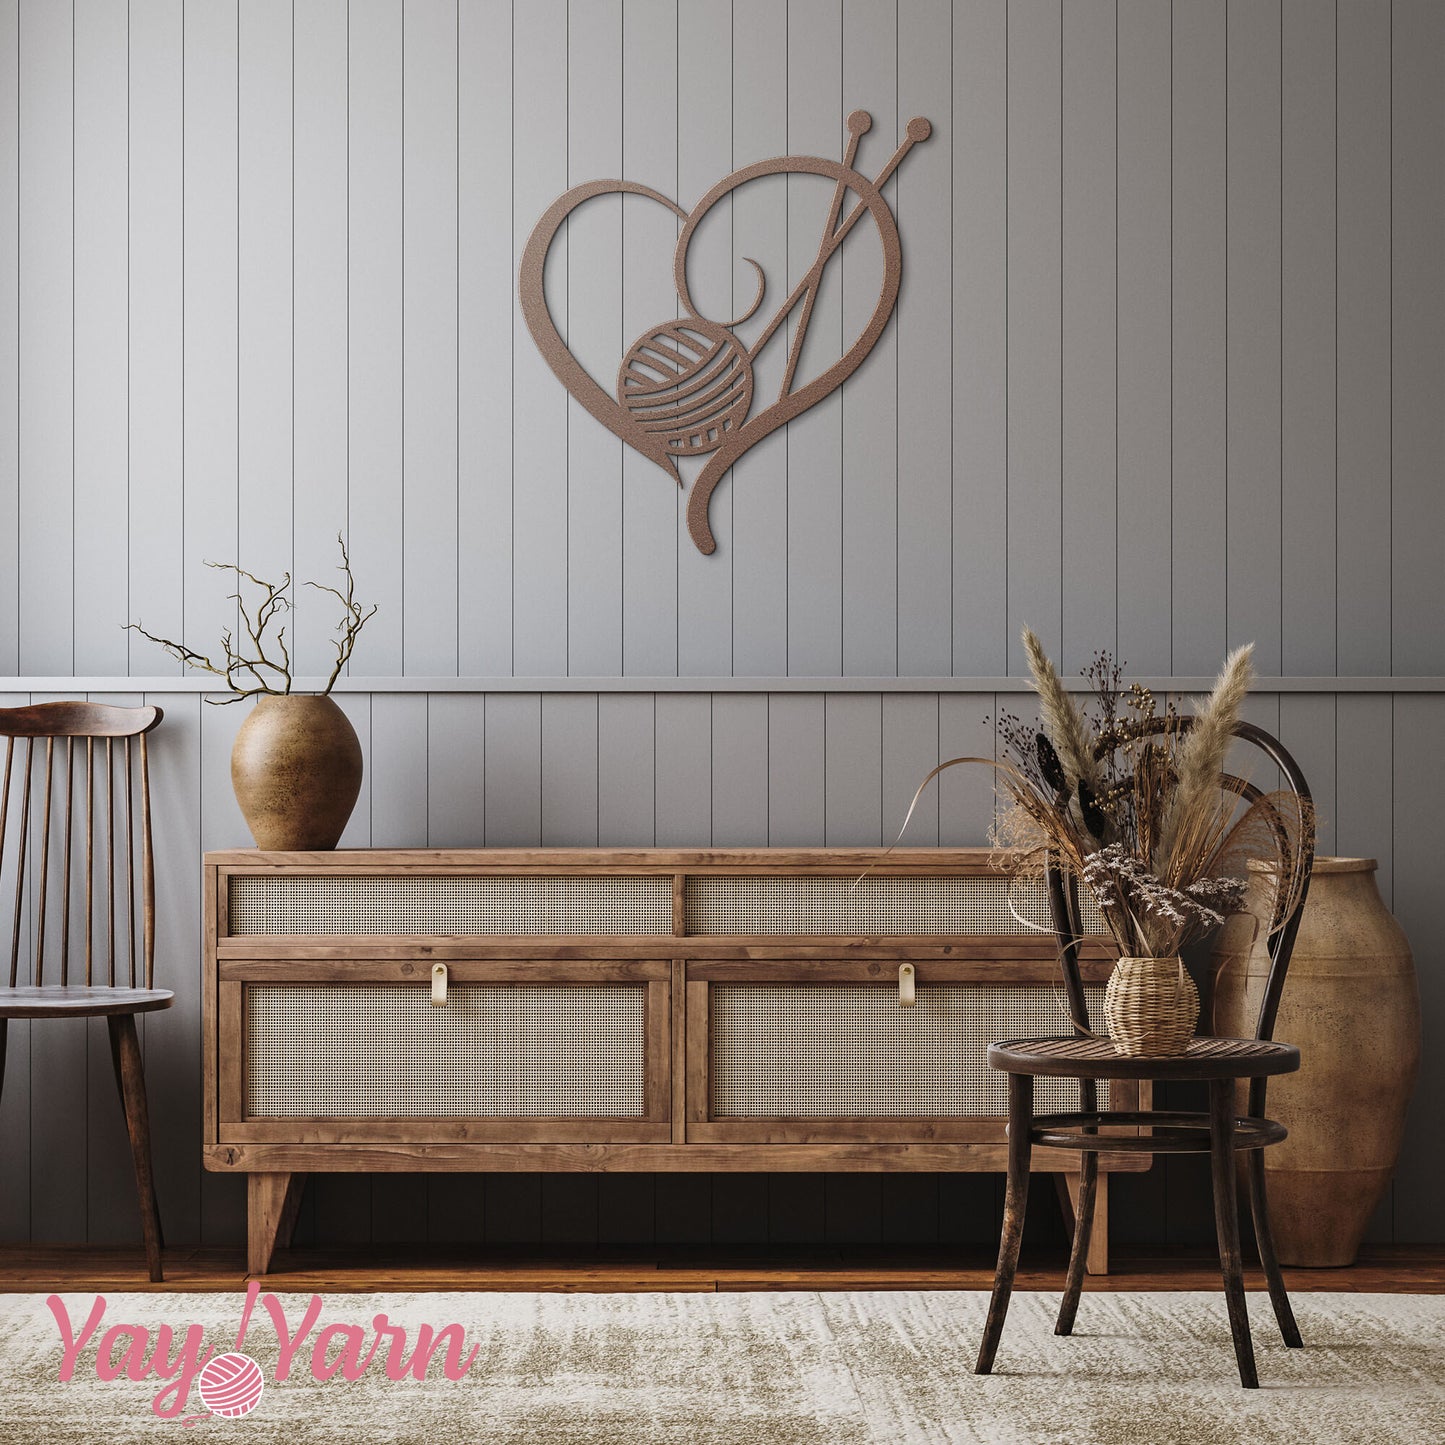 Knit Heart Metal Wall Art Copper on Grey Wall Boho Living Room